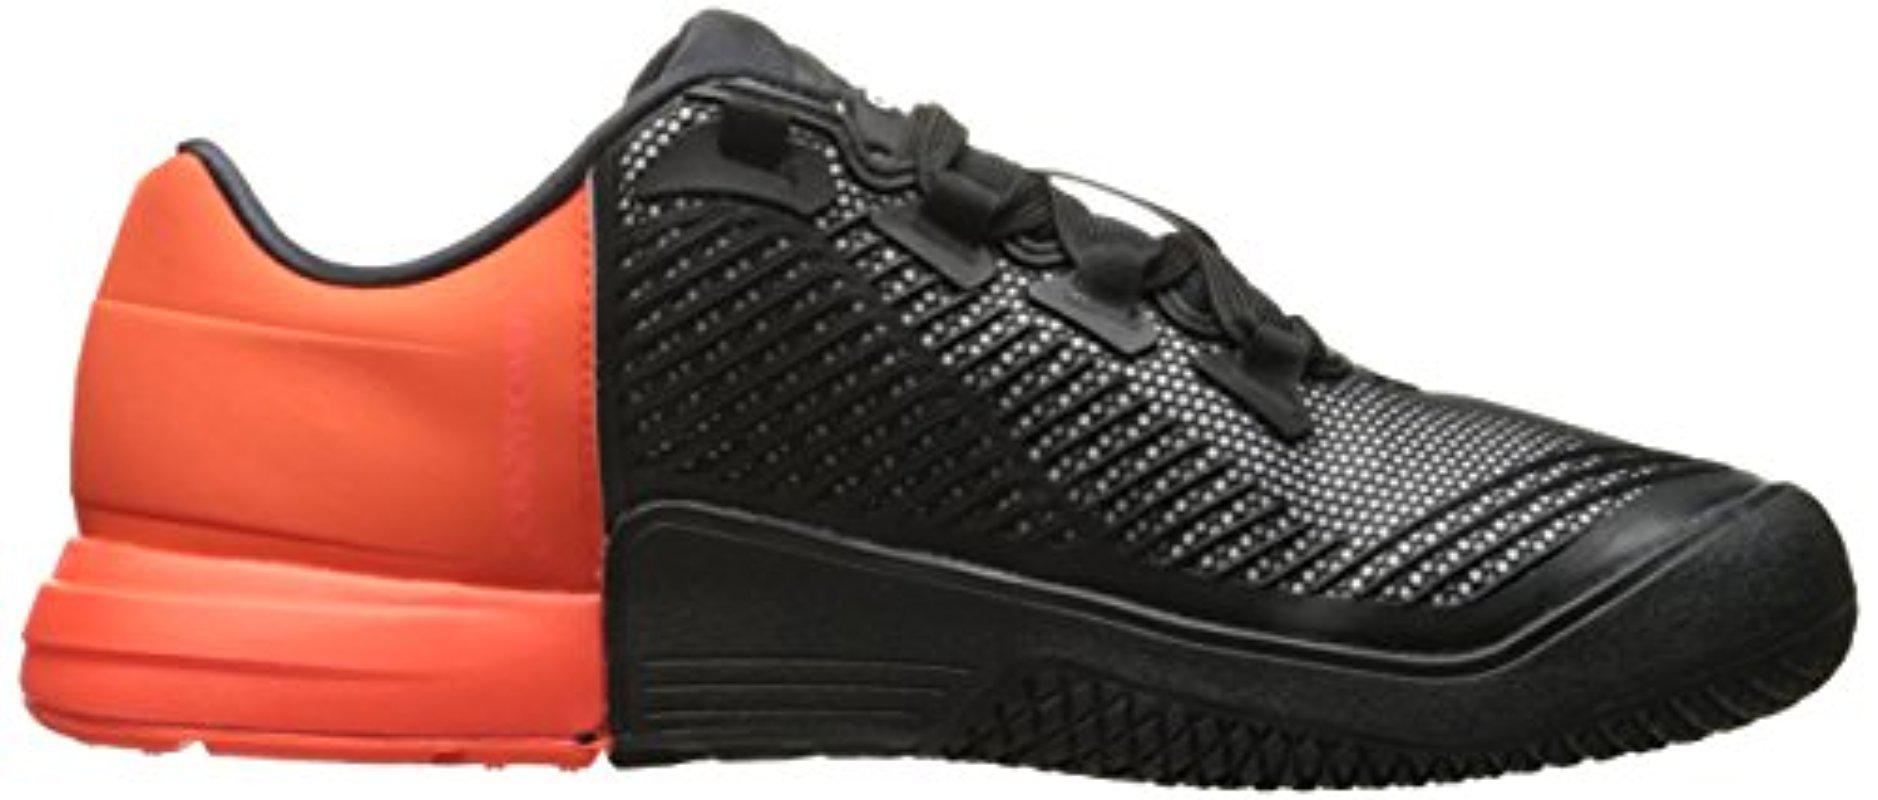 adidas Crazypower Tr Shoes in Black Men | Lyst